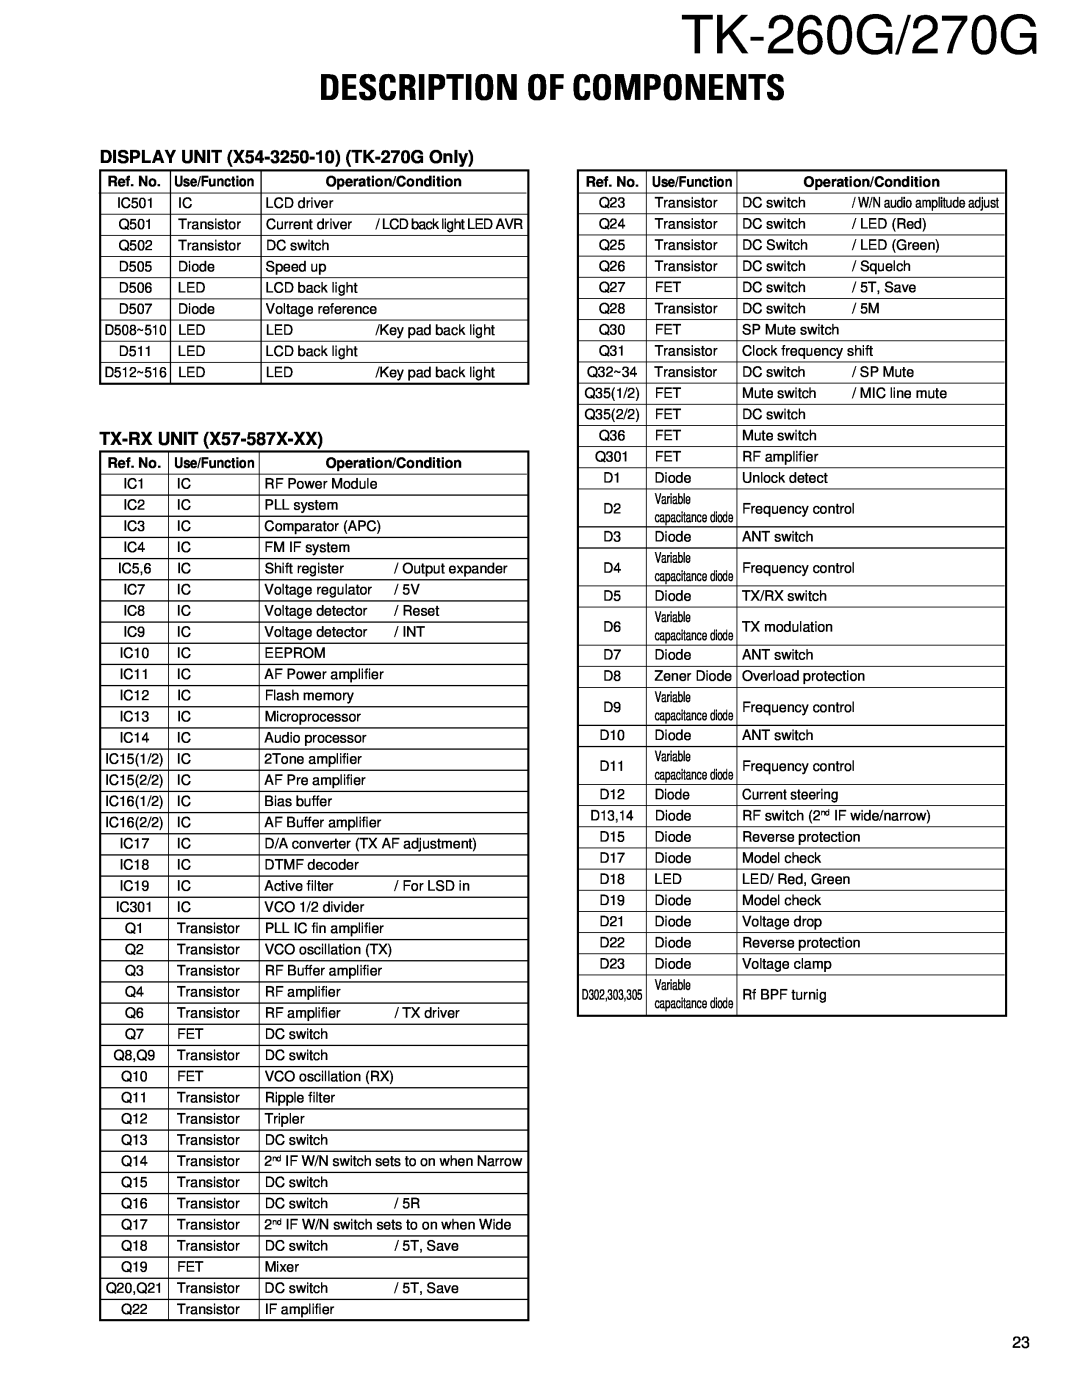 Kenwood service manual Description Of Components, DISPLAY UNIT X54-3250-10 TK-270GOnly, Tx-Rxunit, TK-260G/270G 